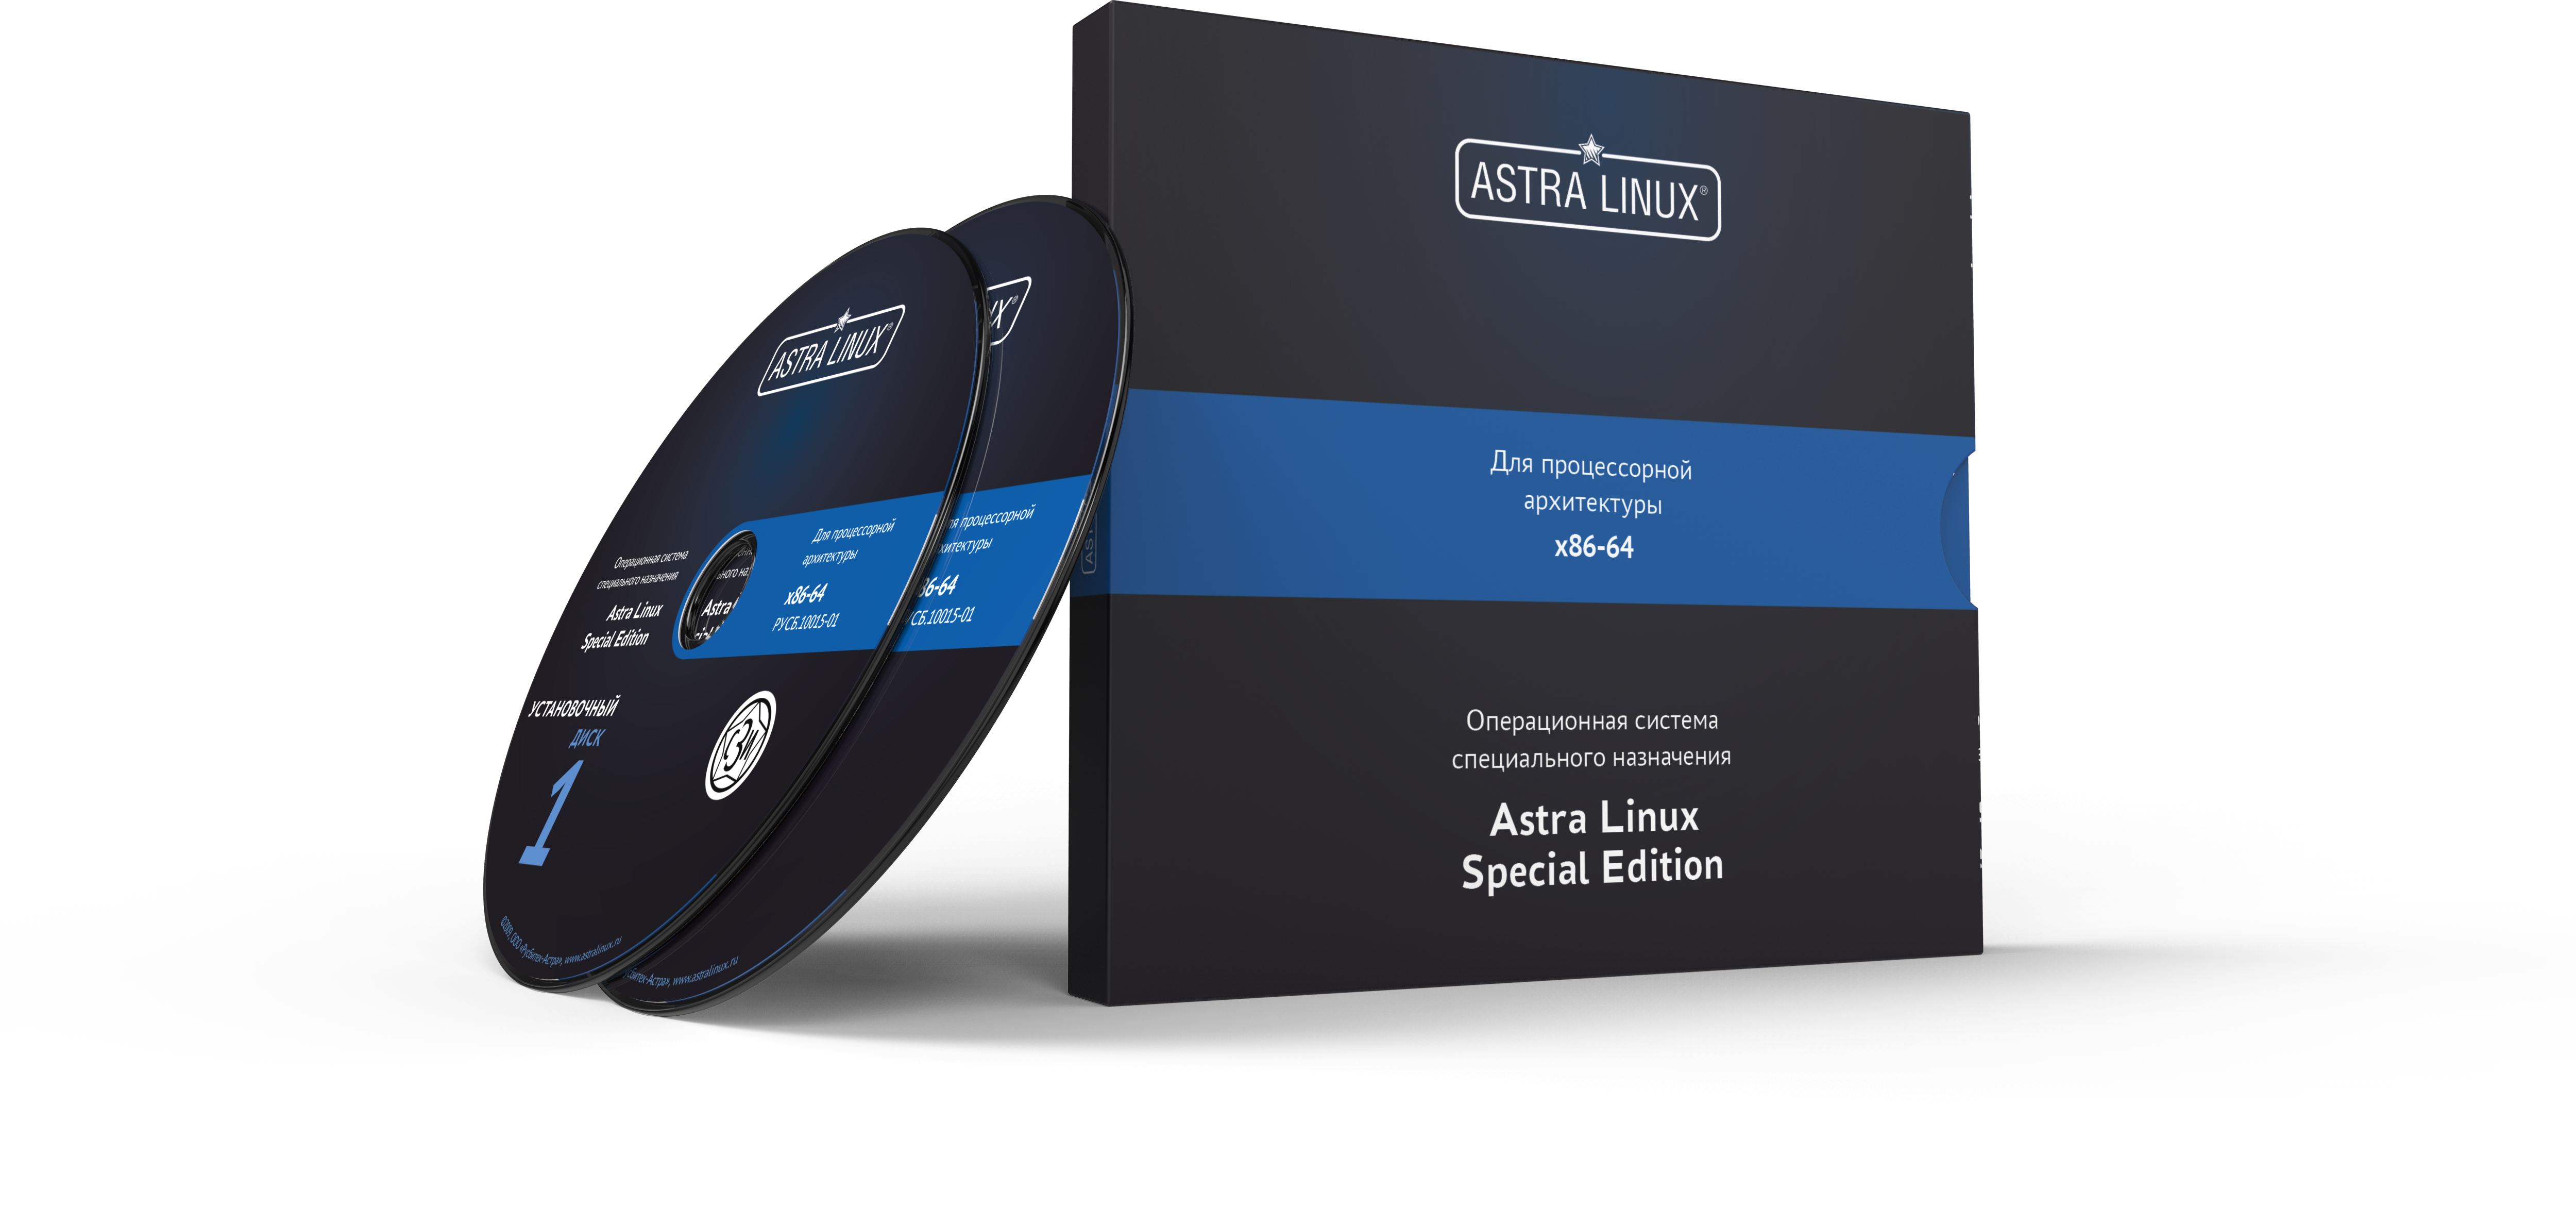 Astra Linux Special Edition 1.7 - Воронеж, "Усиленный", BOX, ФСТЭК, без огр. срока, ТП "Стандарт" на 24 мес.